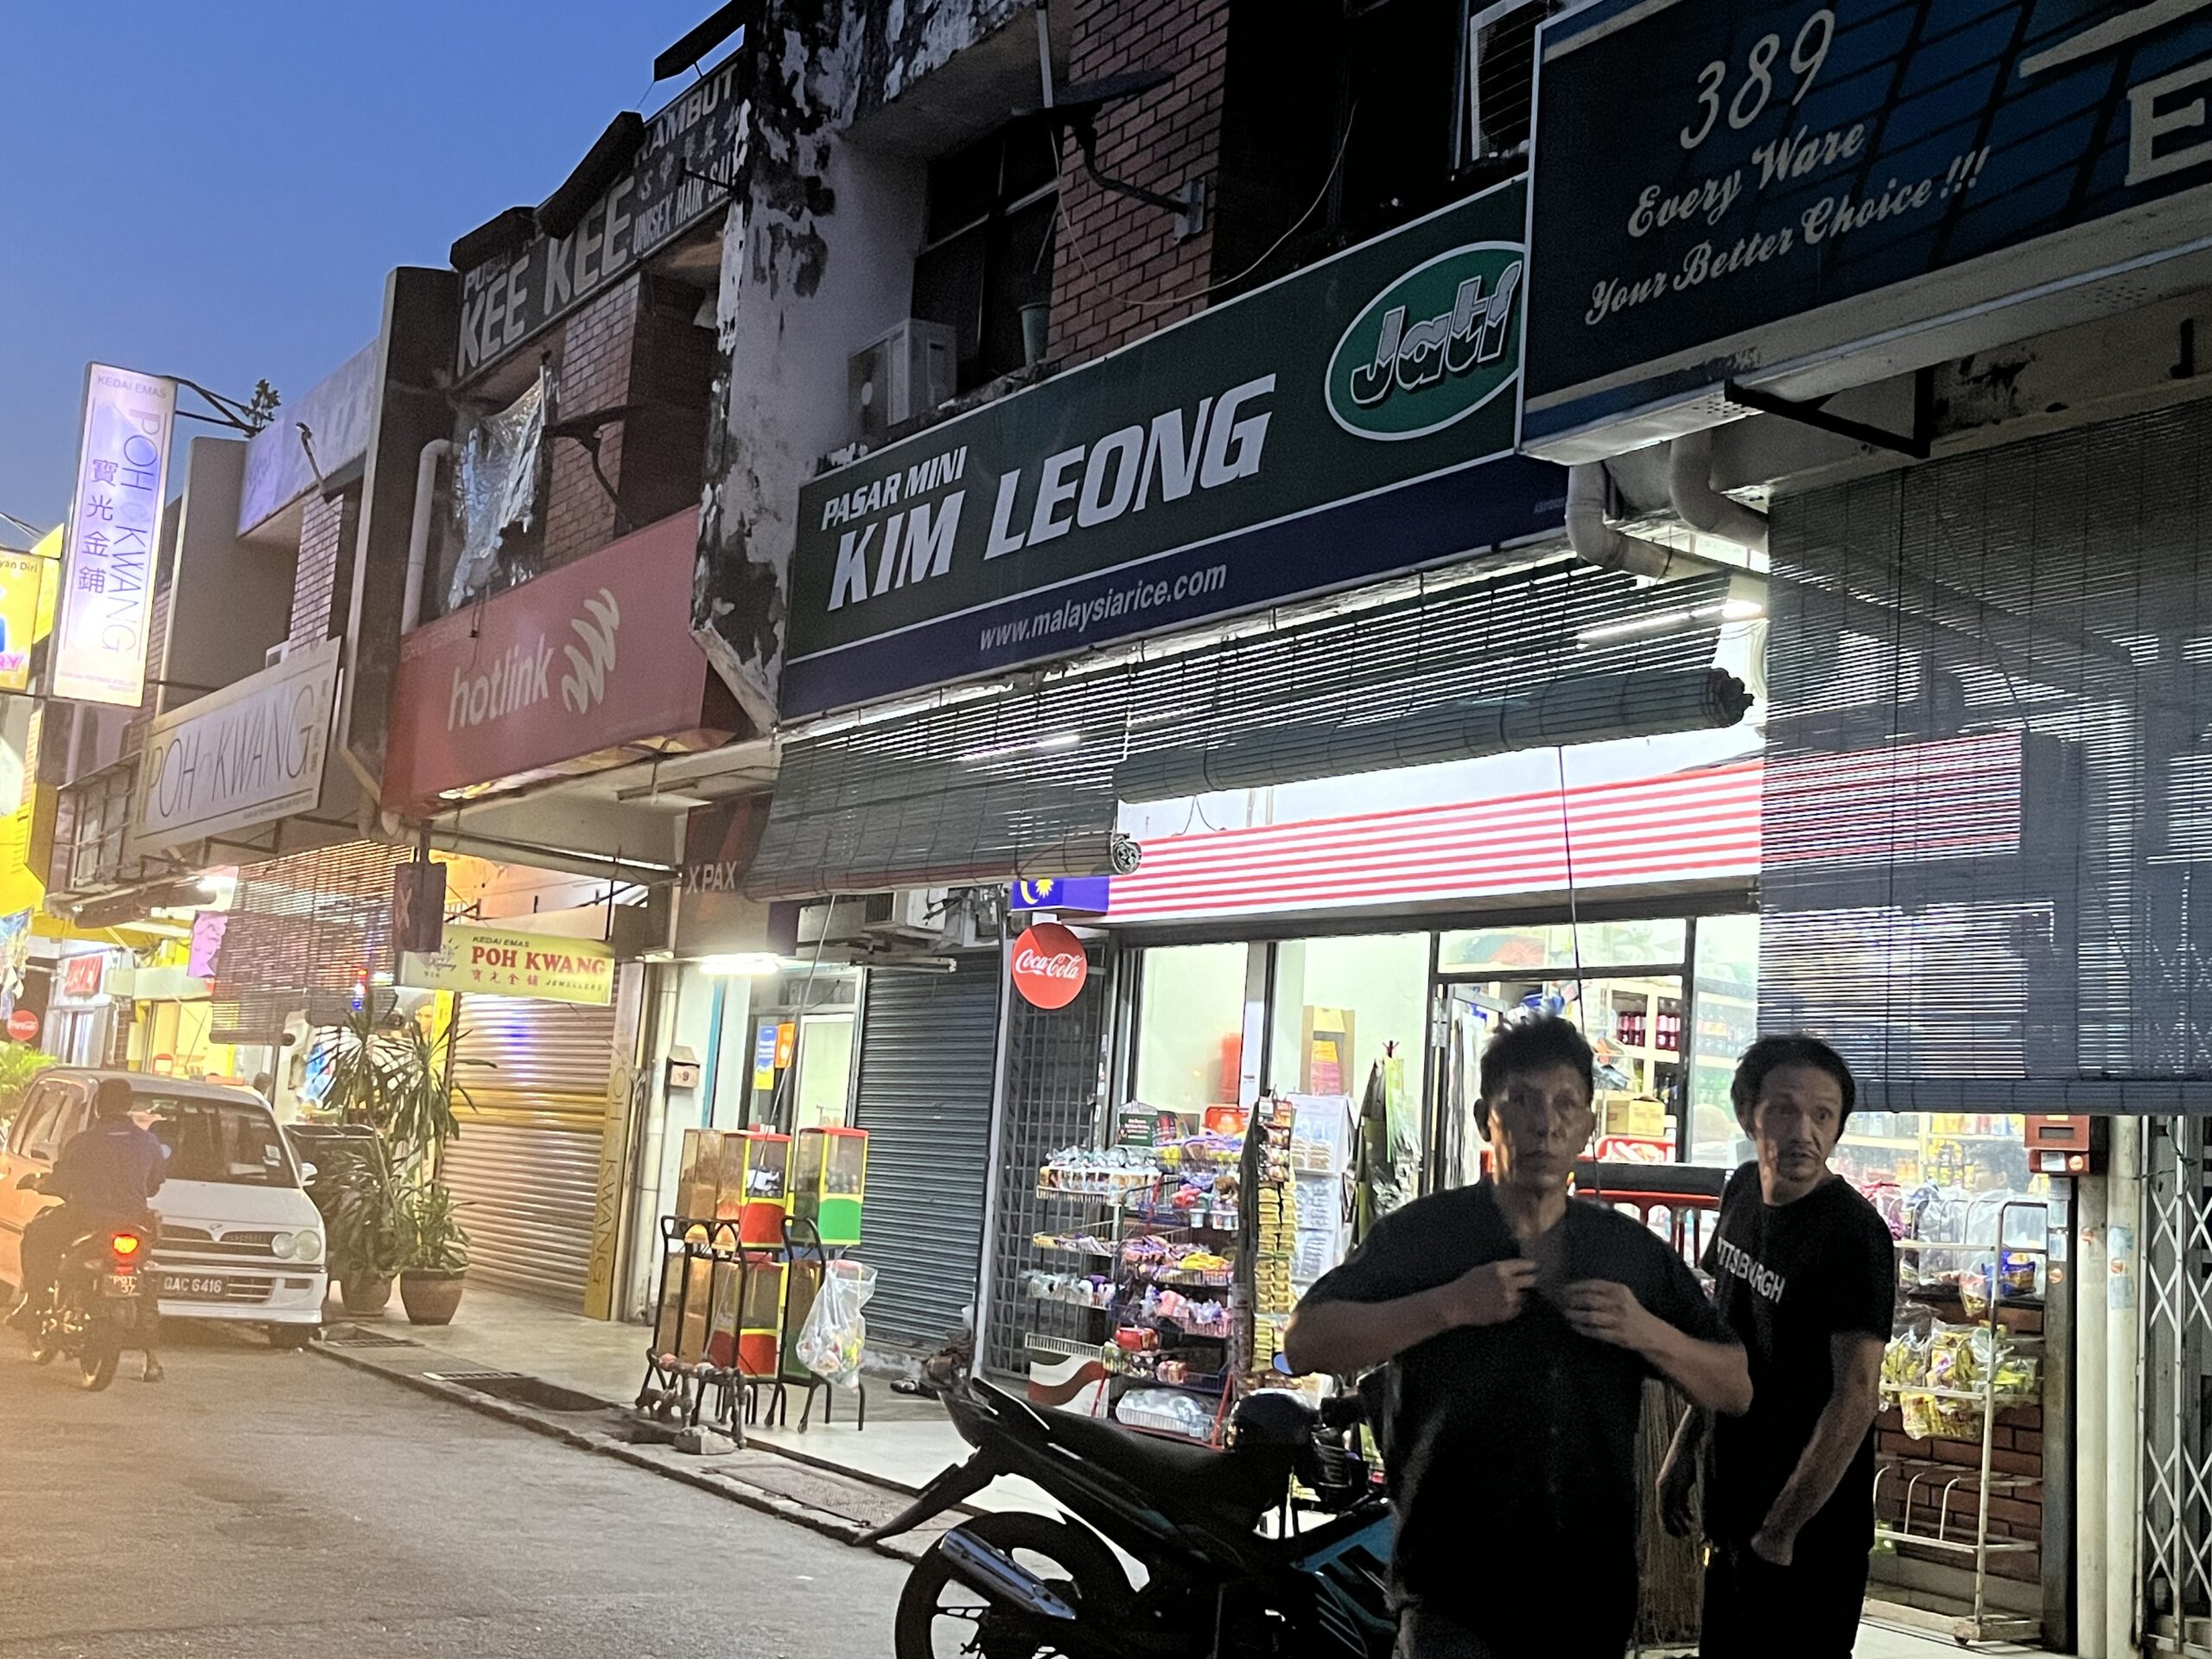 Pasar mini kim leong store front